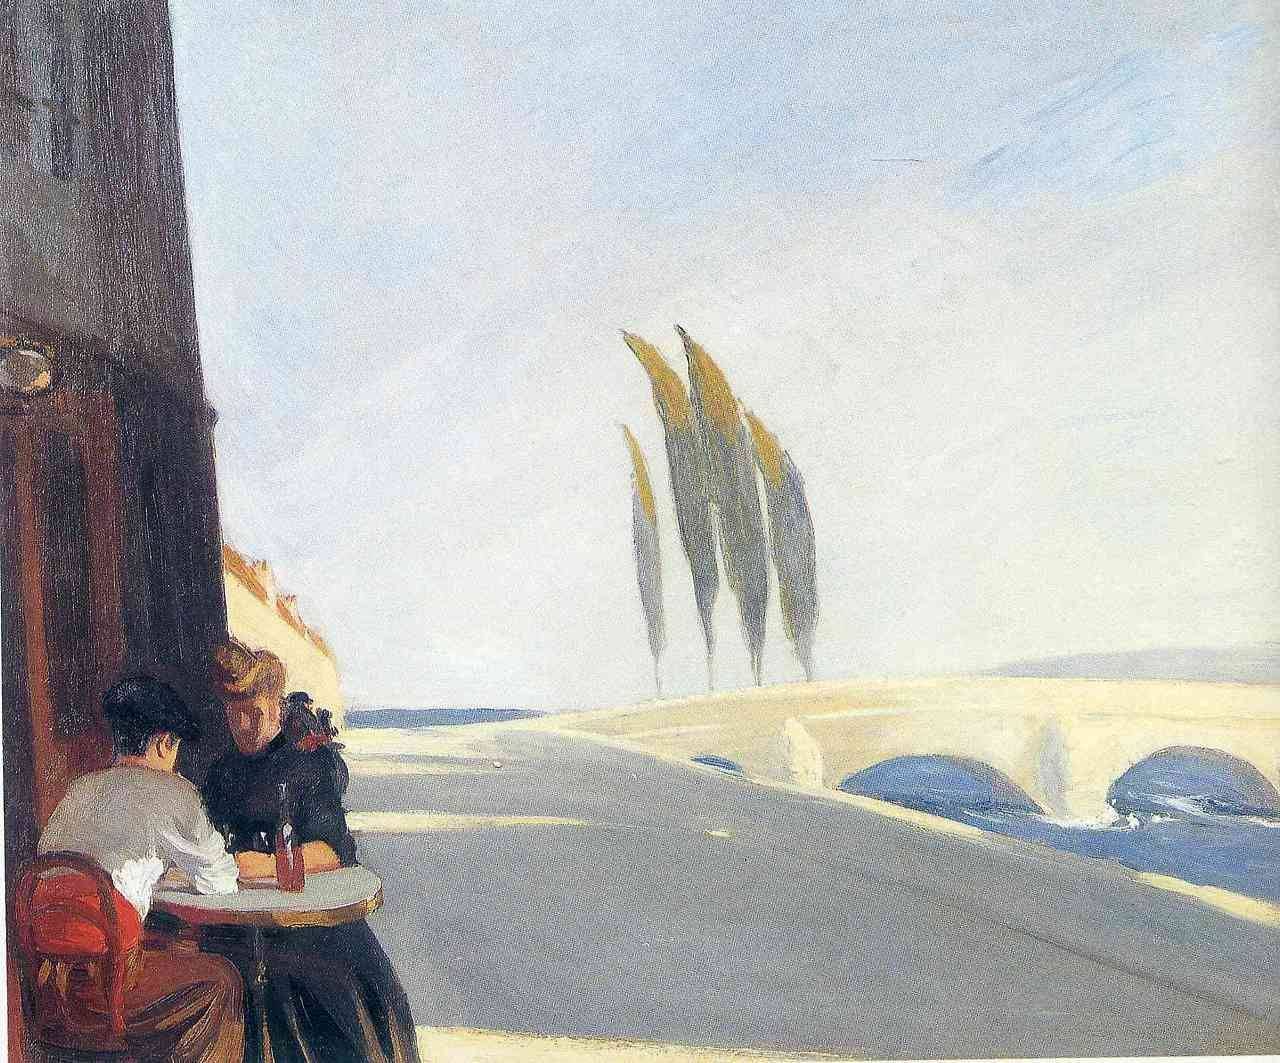 متجر النبيذ by Edward Hopper - 1909م 